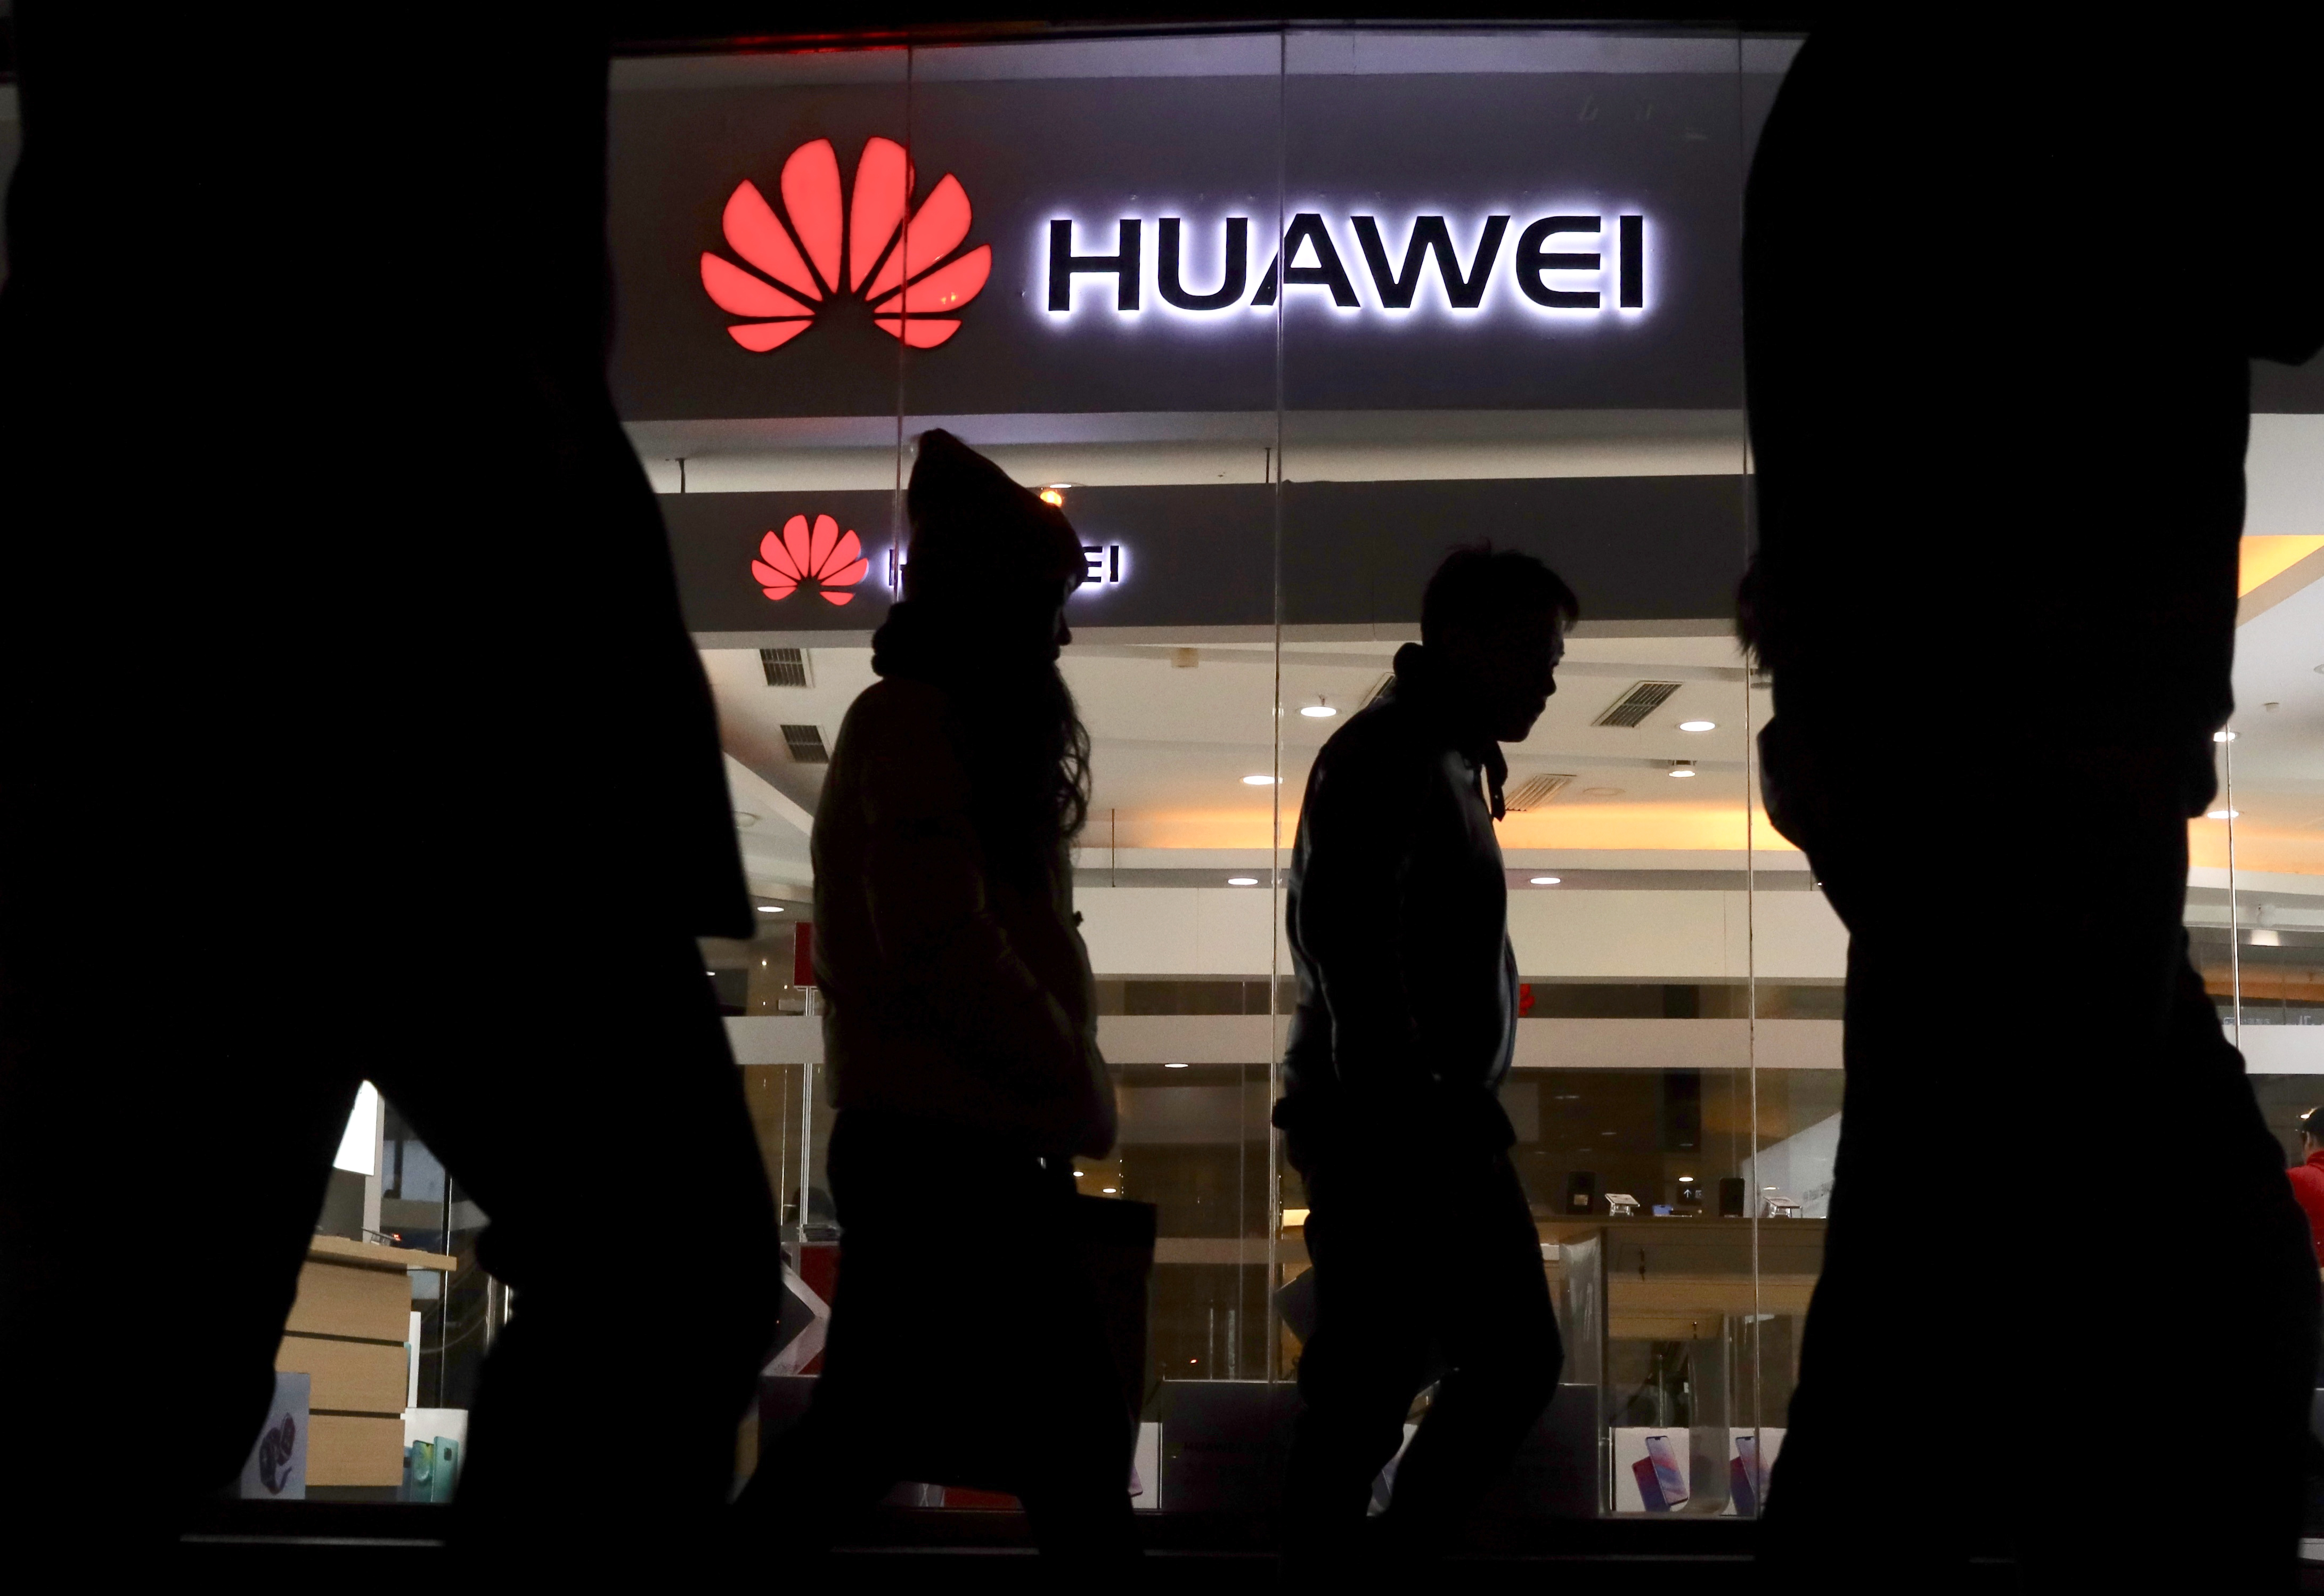 jammer gun oil sds | Executive’s Arrest, Security Worries Stymie Huawei’s Reach